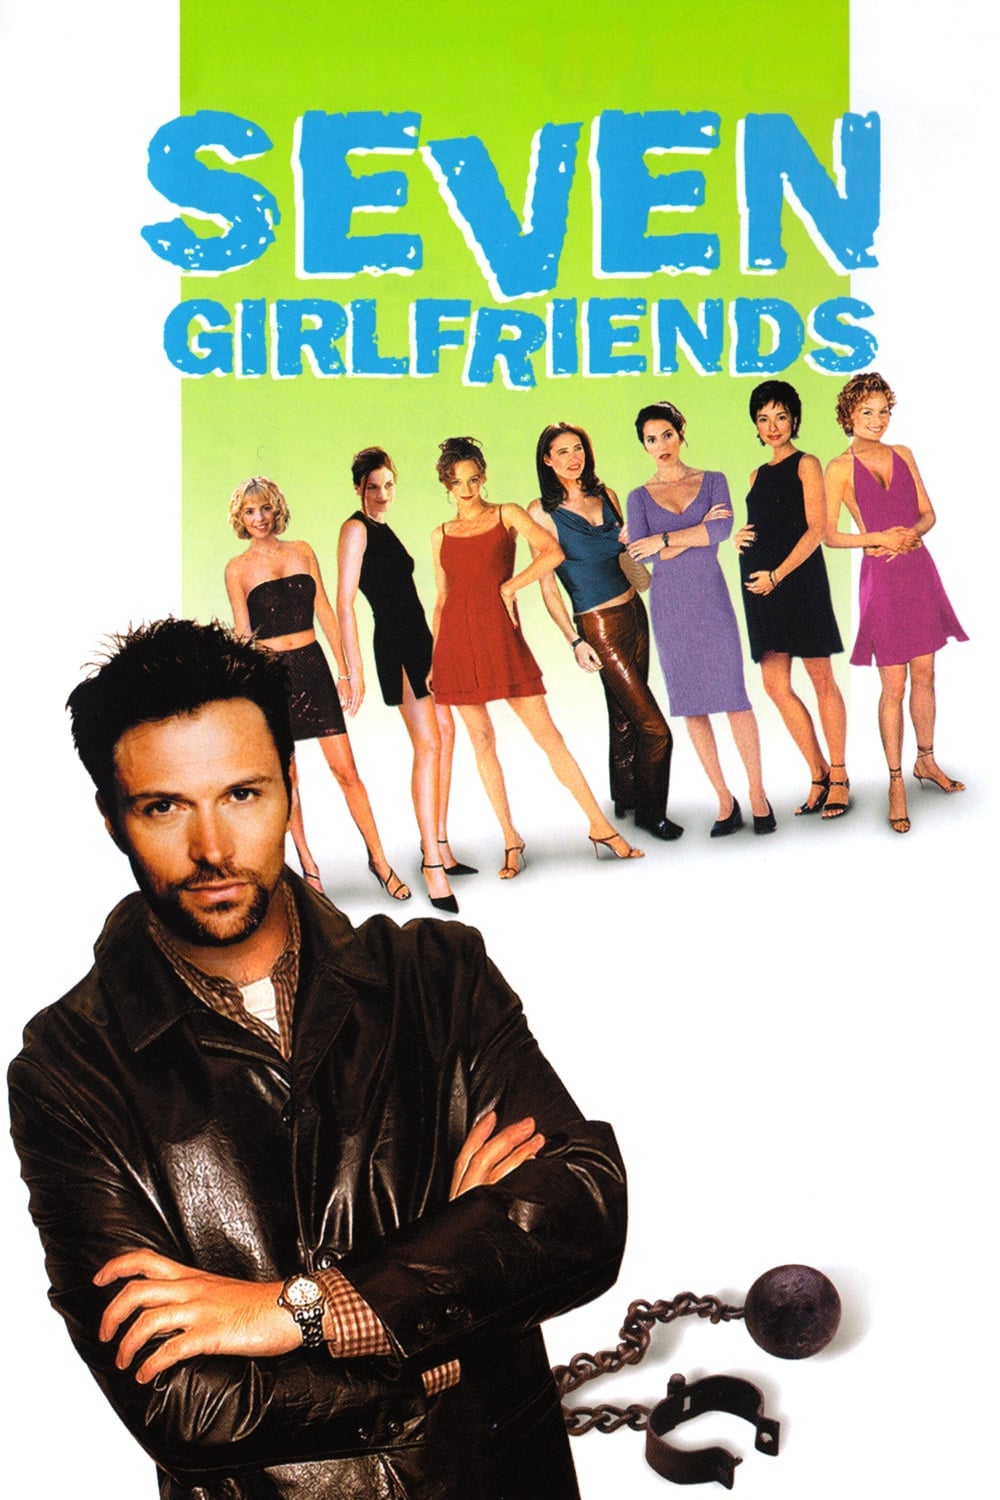 7 Girlfriends (2000)